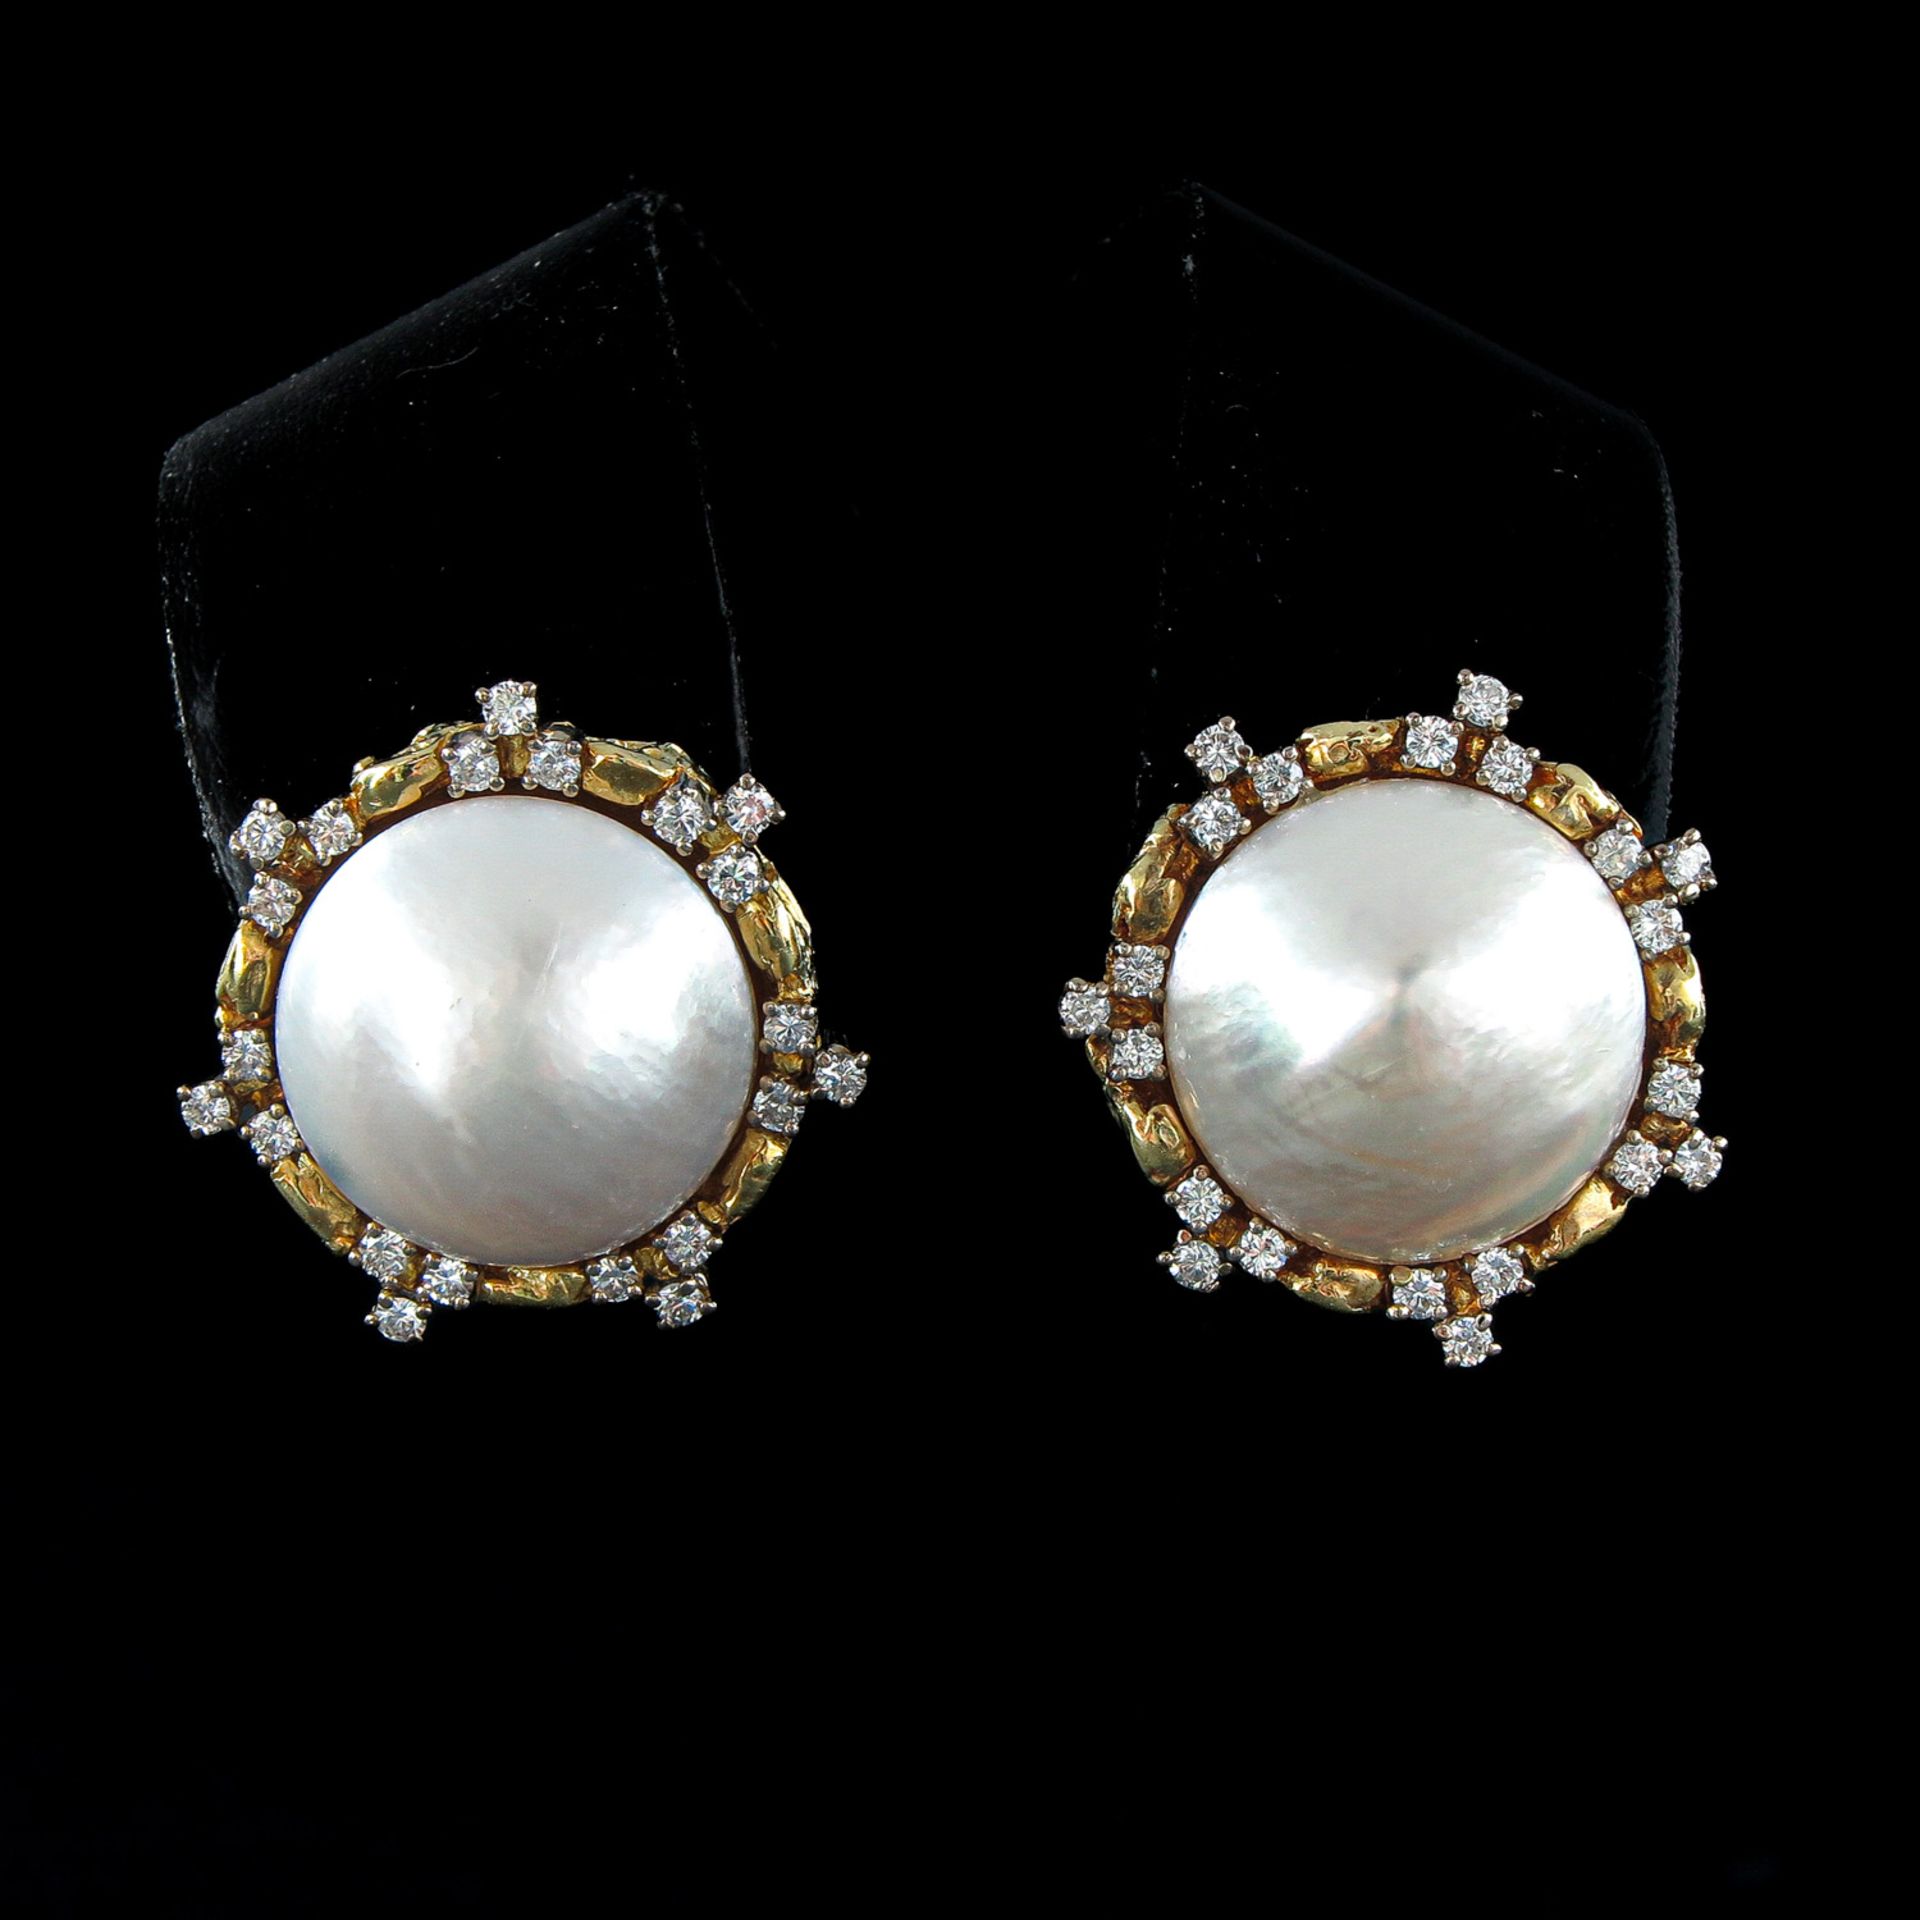 An Pair of 18KG Diamond and Pearl Earrings